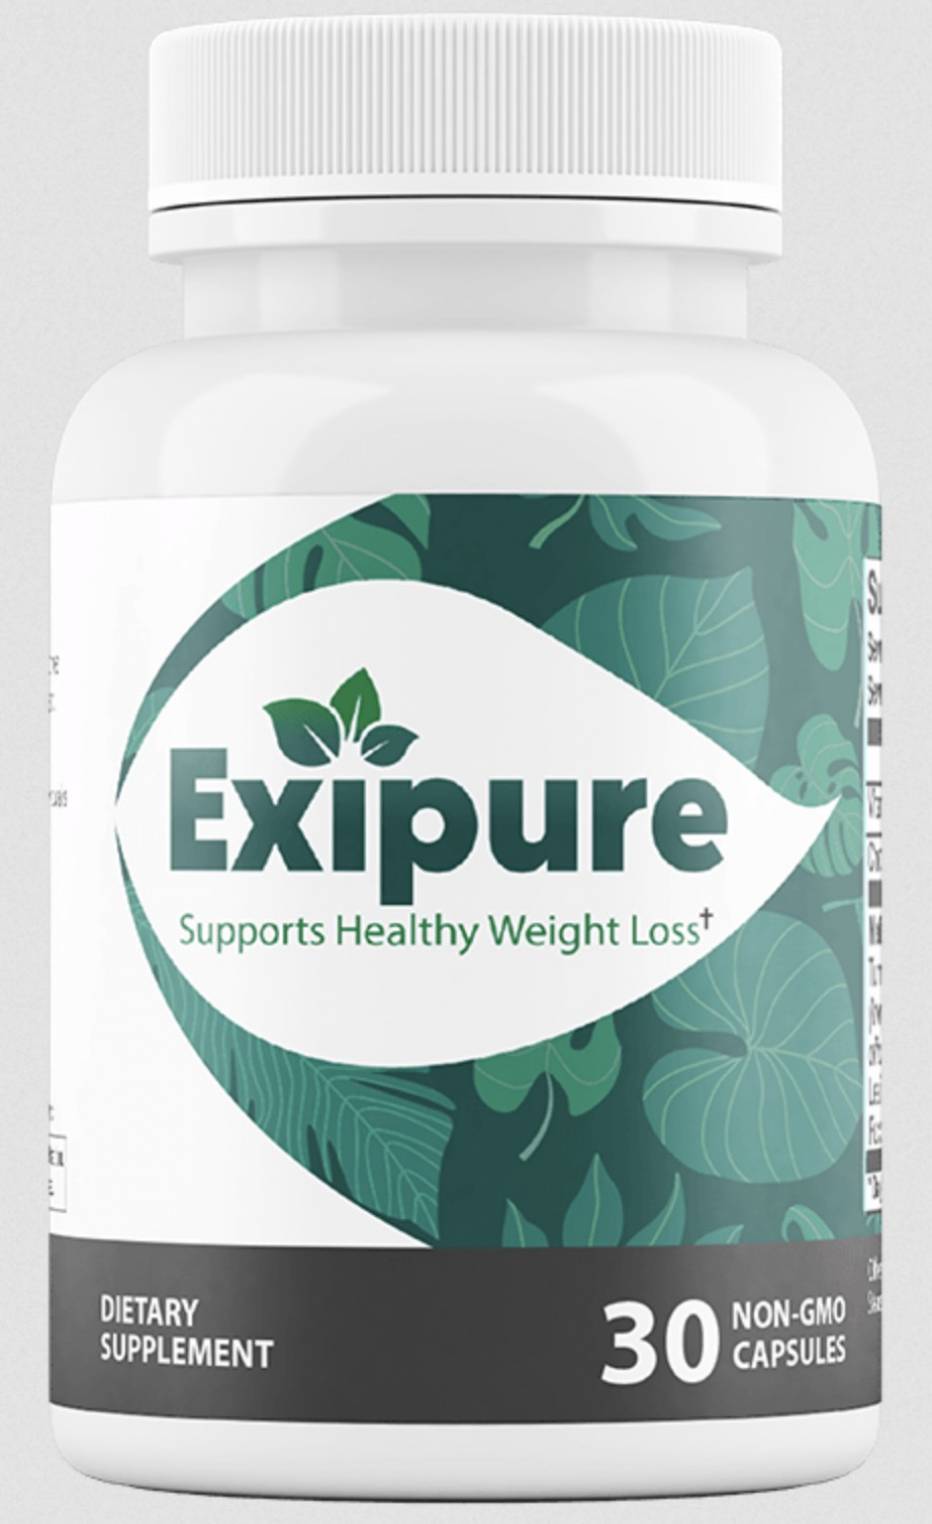 Is Exipure Healthy